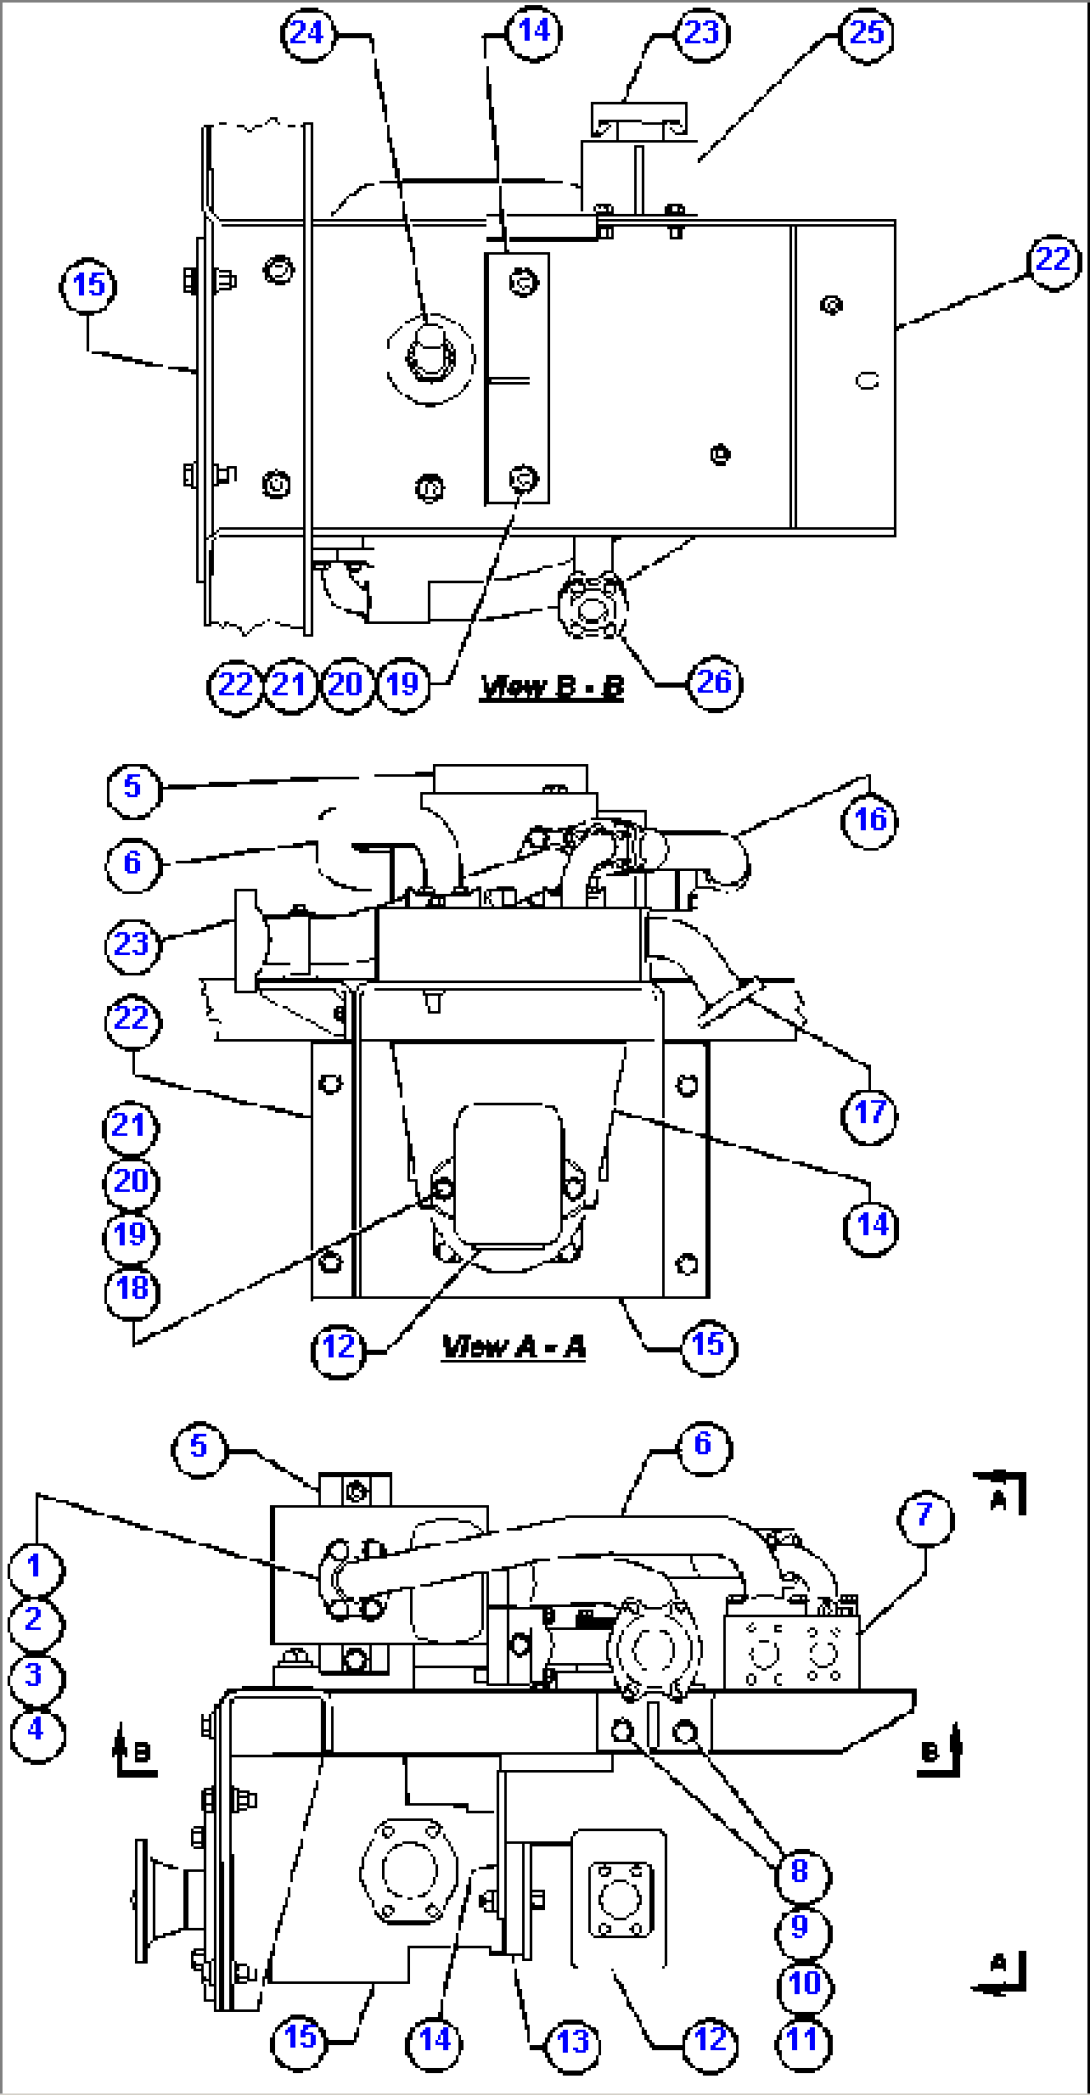 HOIST PUMP MODULE - 1 (EF7580)